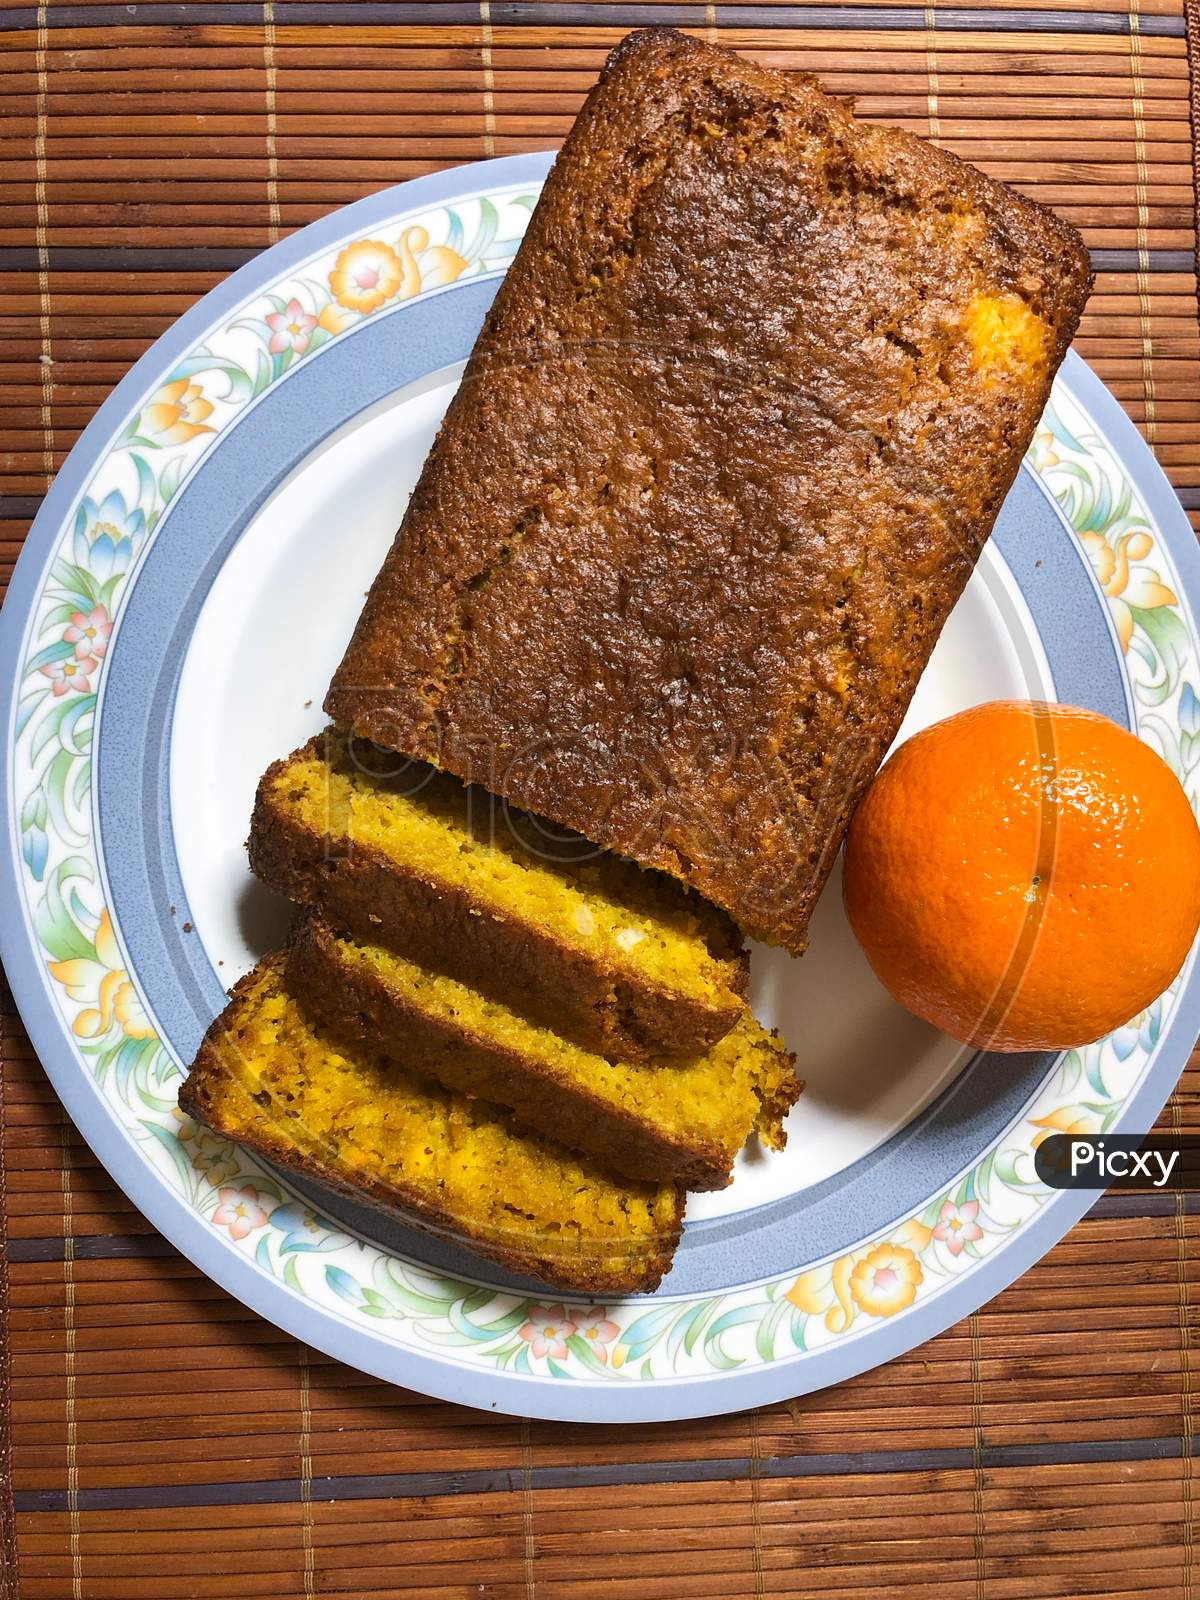 Homemade Orange cake